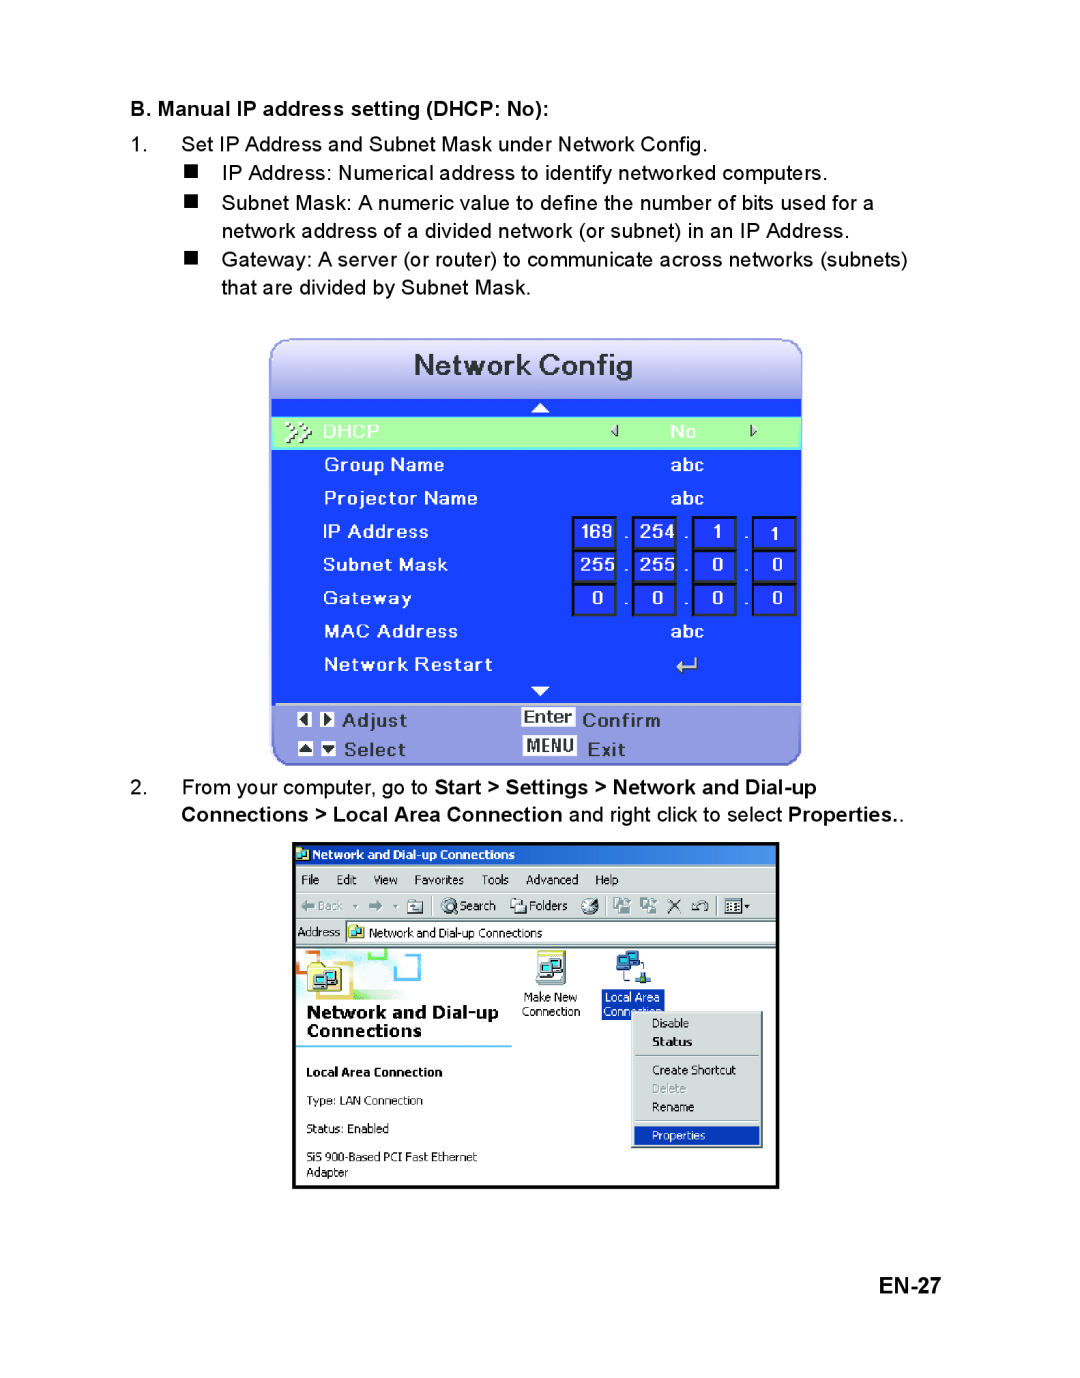 ViewSonic PJD6251 warranty EN-27, B. Manual IP address setting DHCP No 